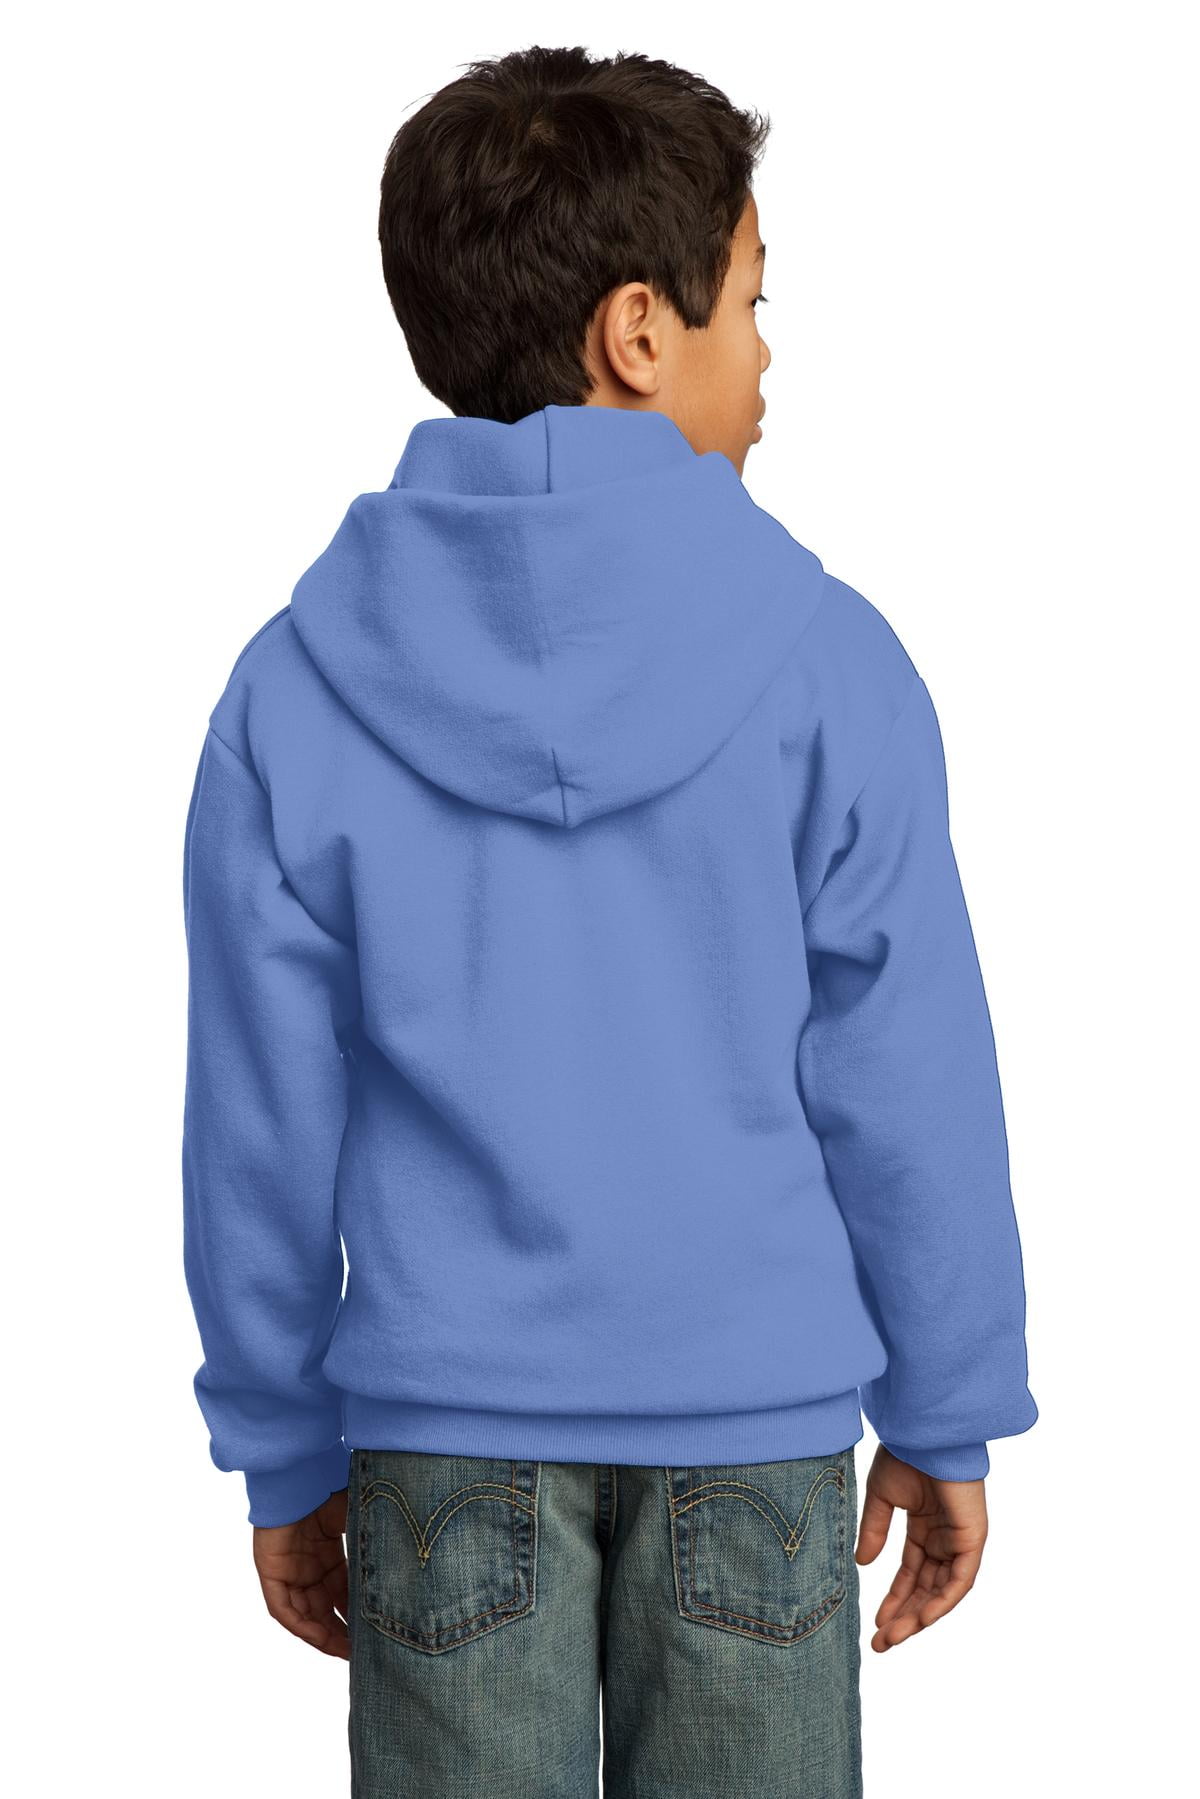 Port & Company Youth Core Fleece Pullover Hooded Sweatshirt-L (Carolina Blue)